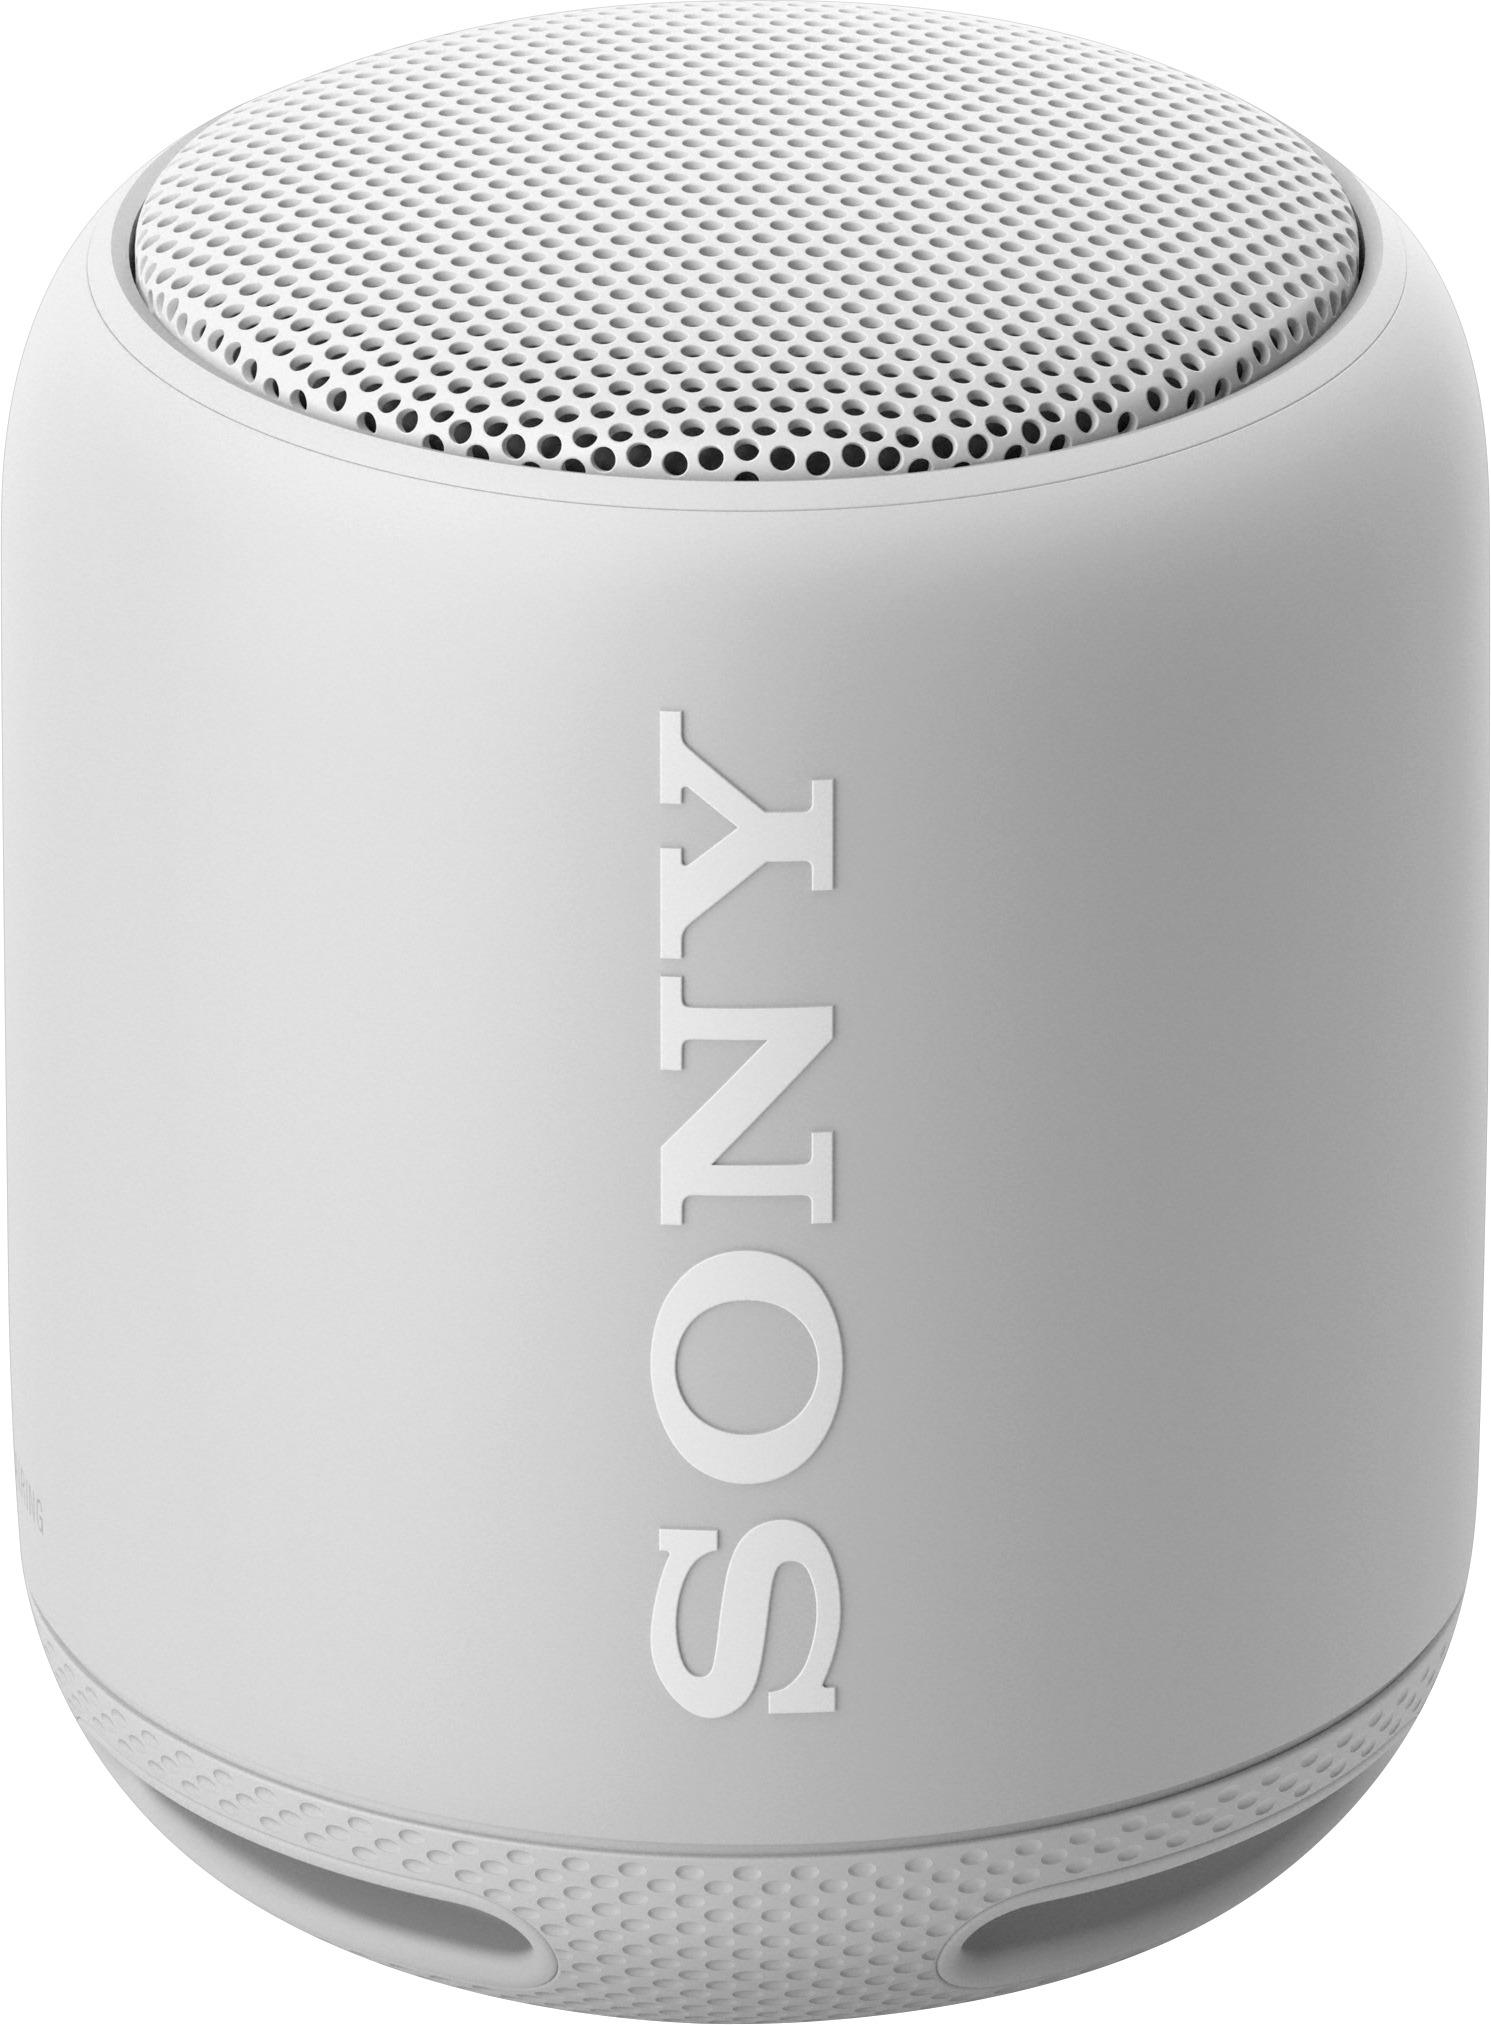 Sony SRS-XB10 Bluetooth Speaker Extra Base - Black - Super Fast Delivery